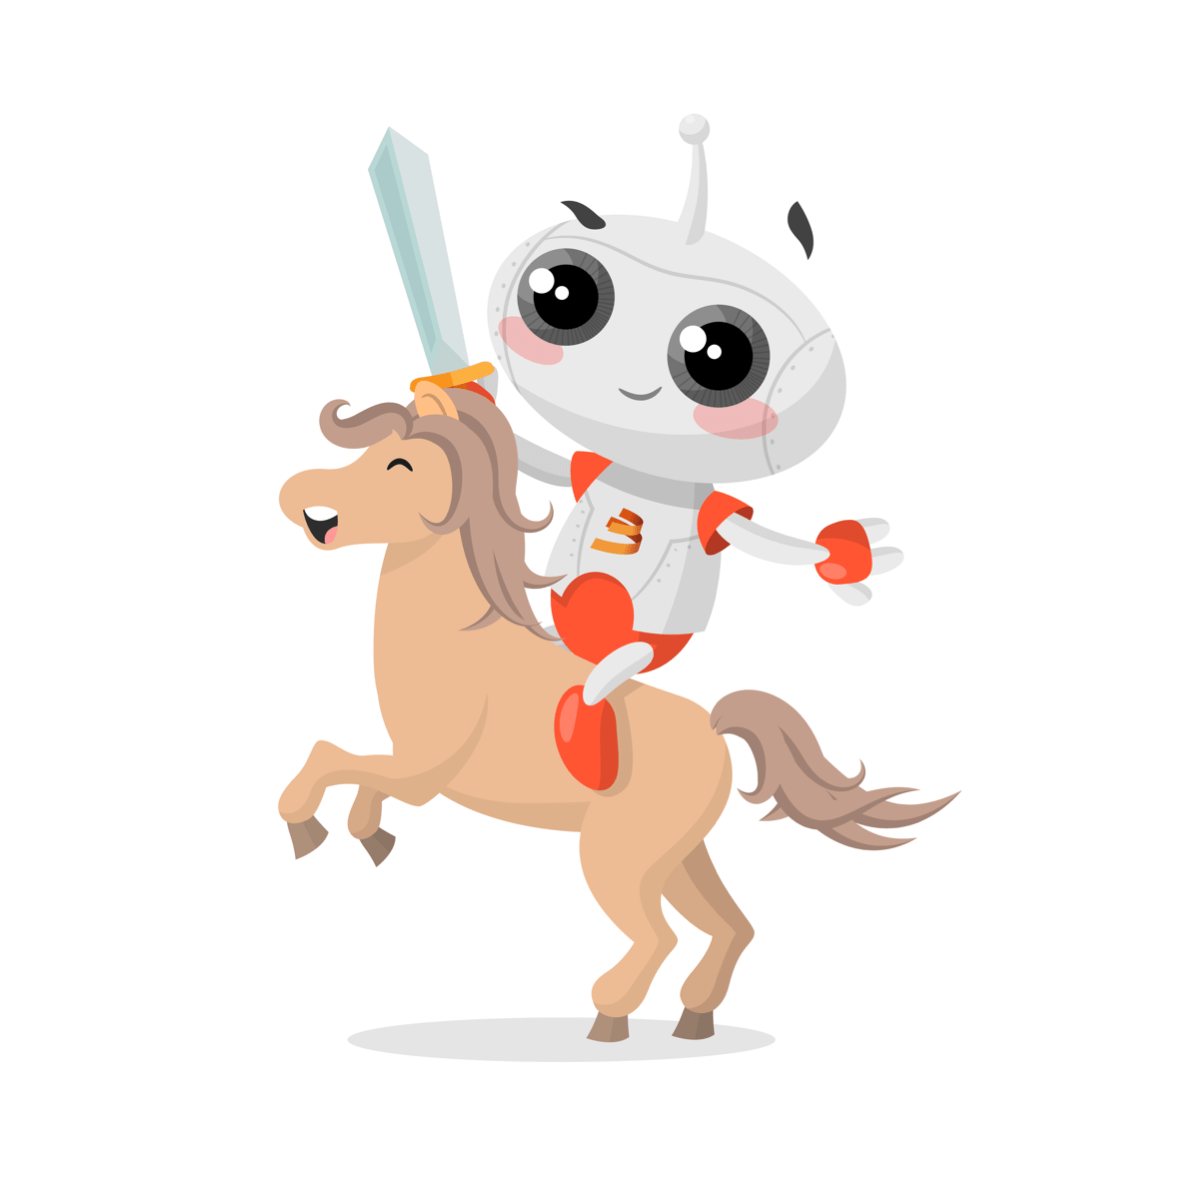 Hopper on horseback with a sword